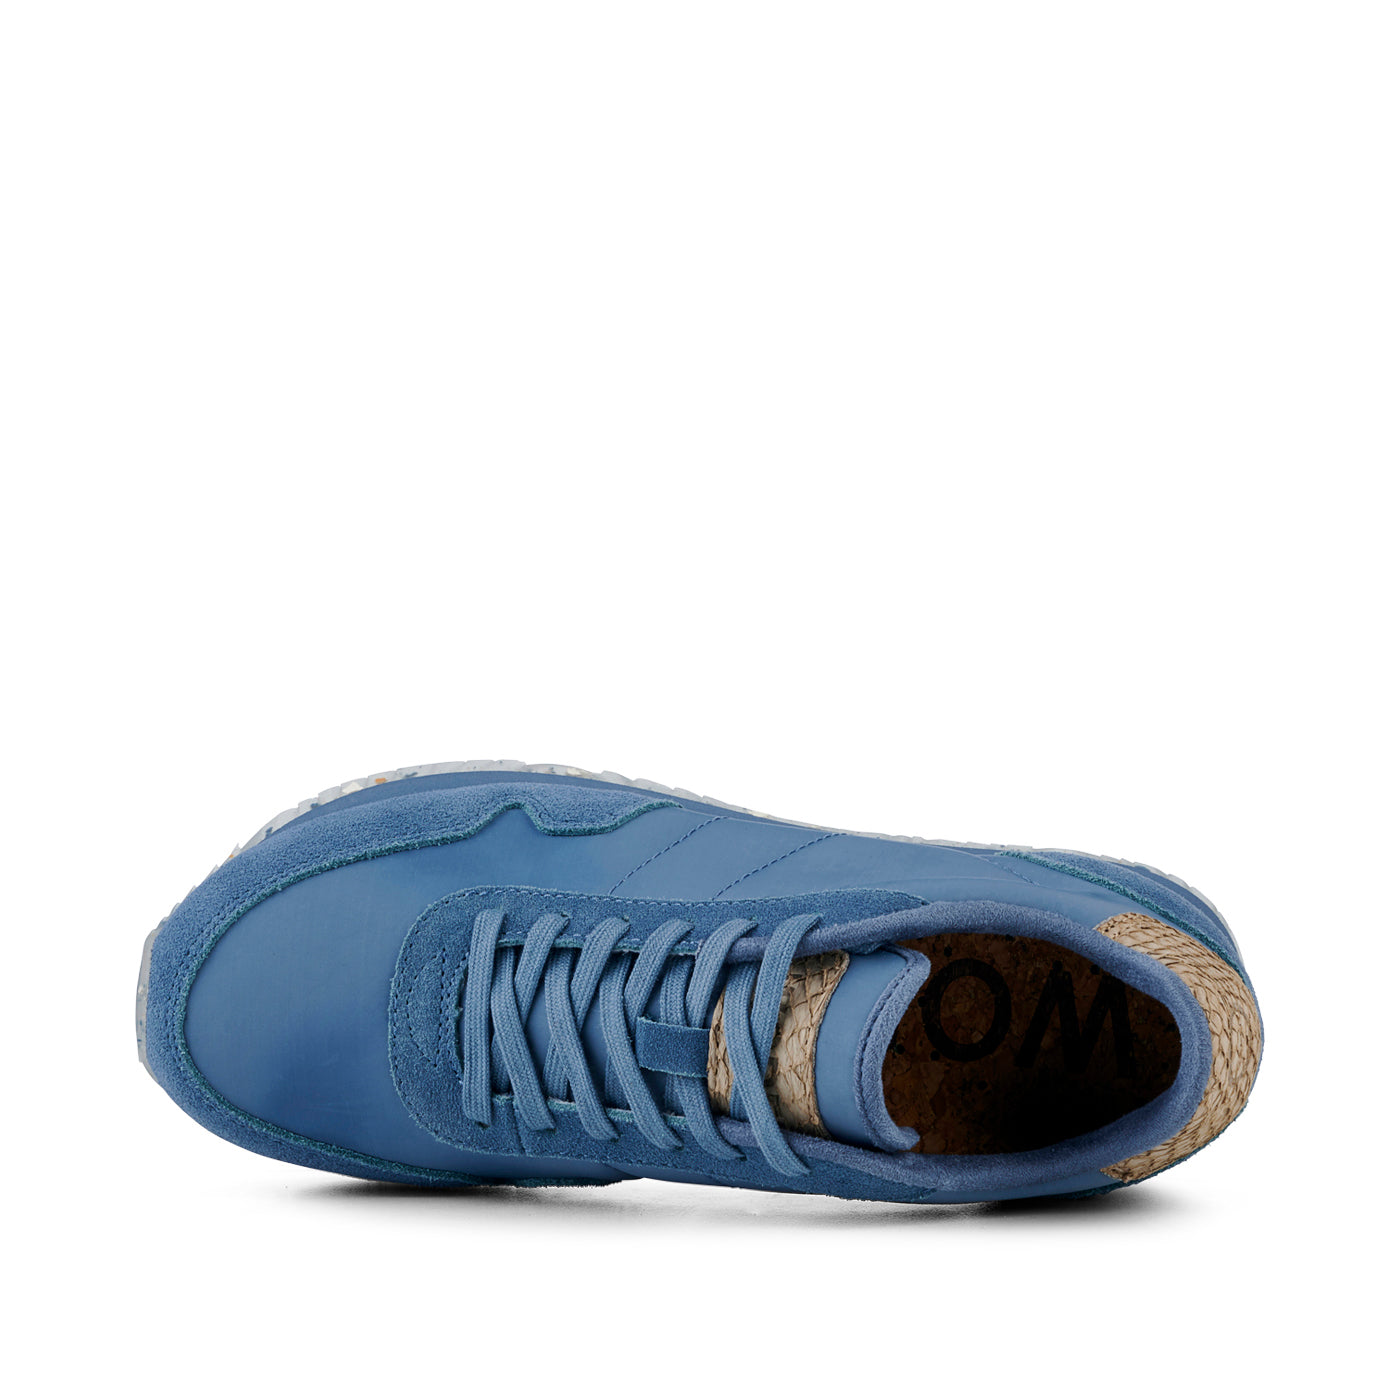 WODEN Nora III Leather Sneakers 773 Vintage Blue